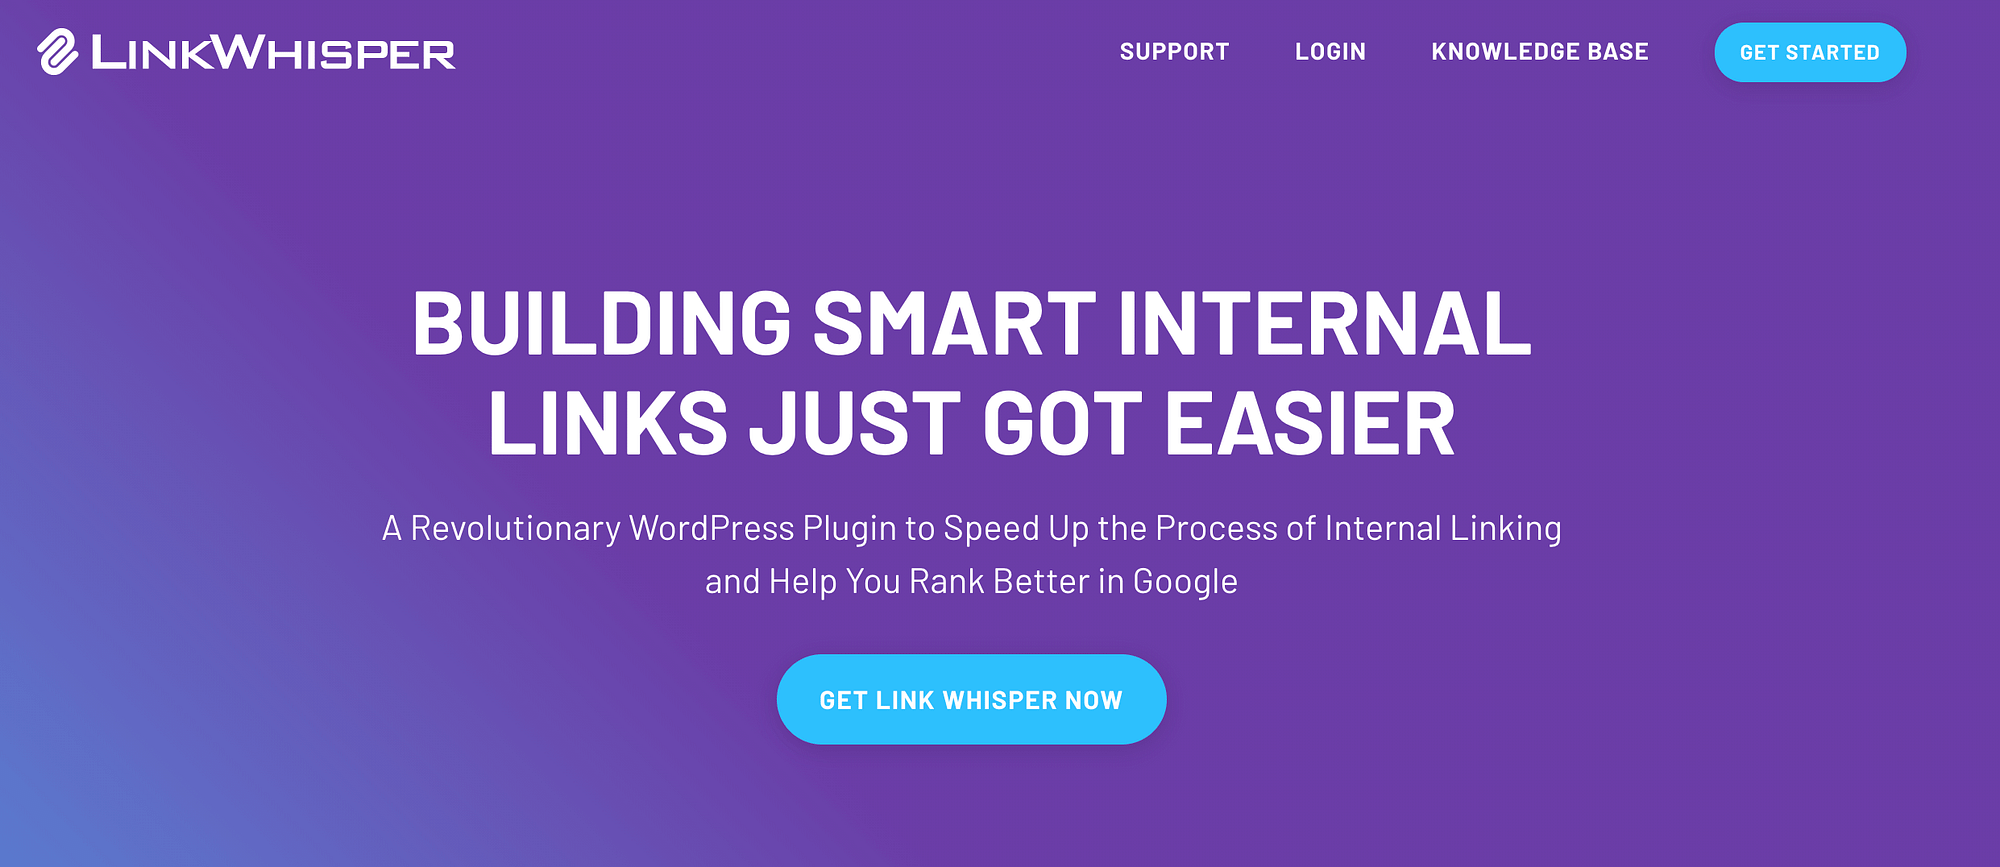 LinkWhisperer 可以帮助您创建企业 WordPress 网站。 